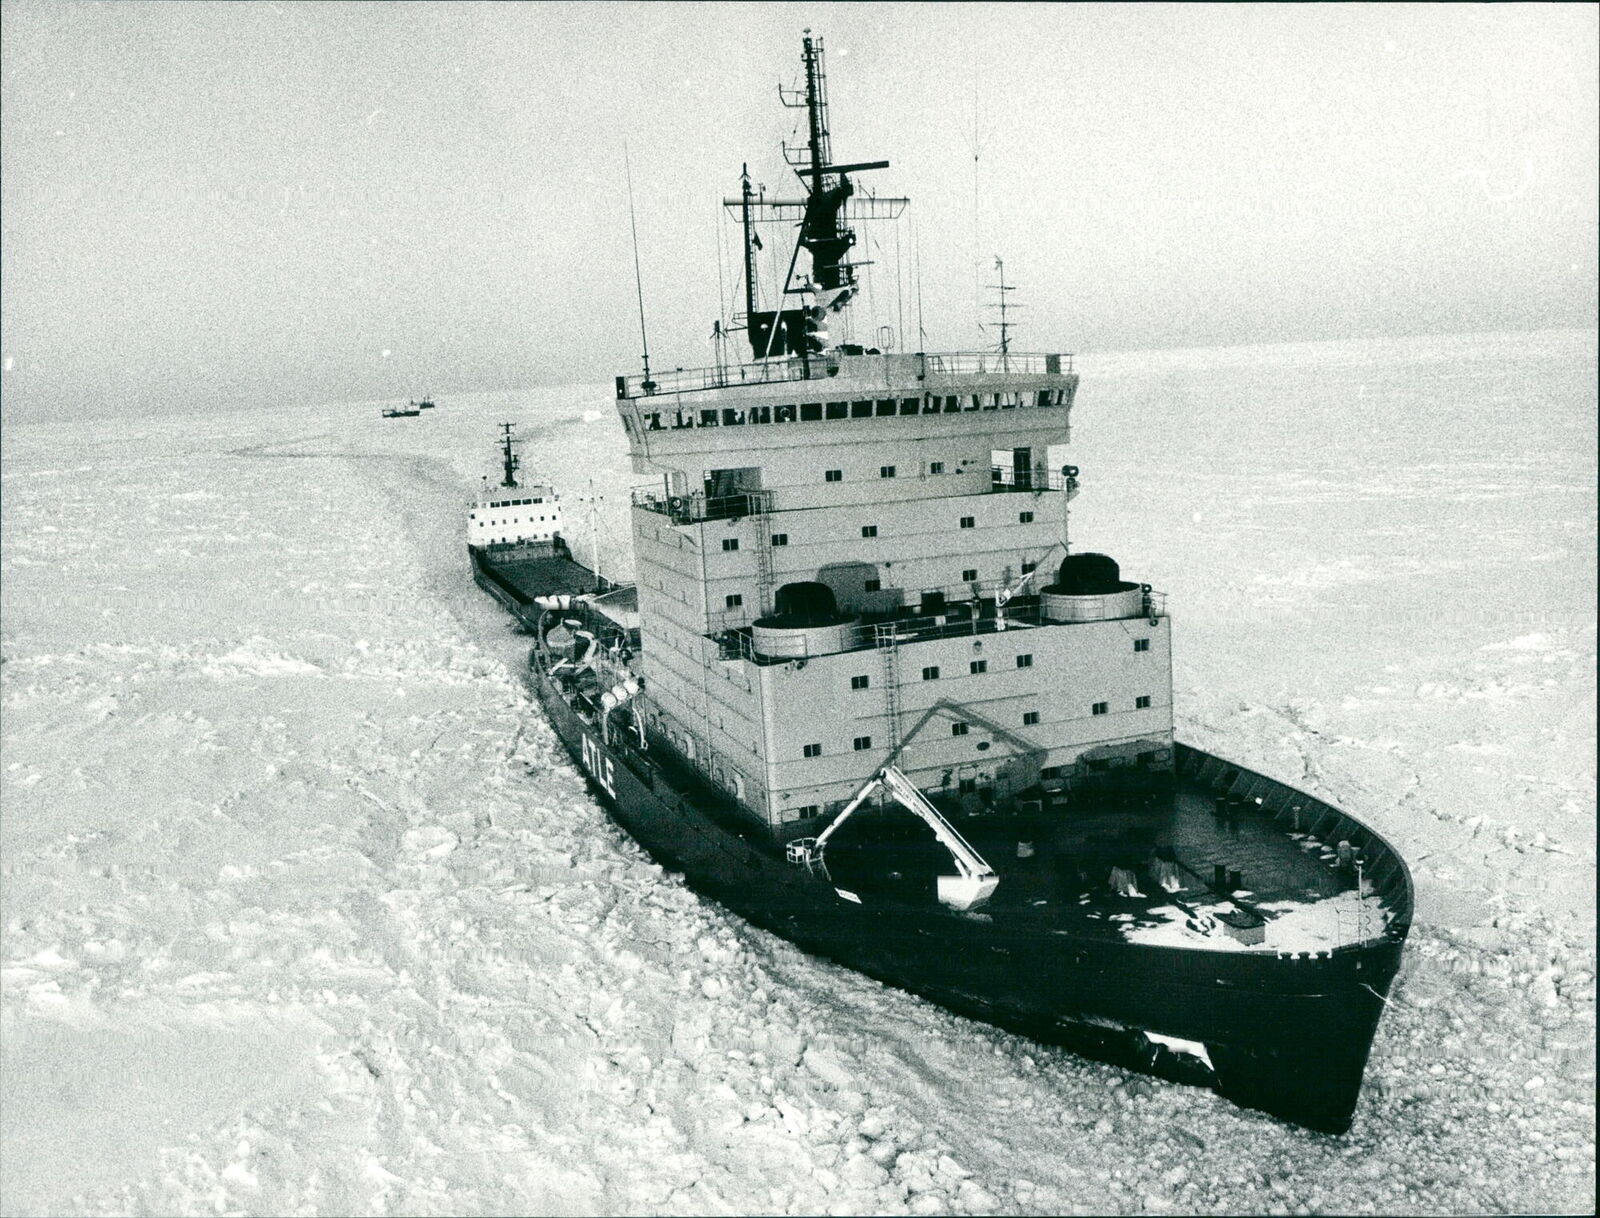 Icebreaker Atle in hard work north of Stockholm - Vintage Photograph 2469991